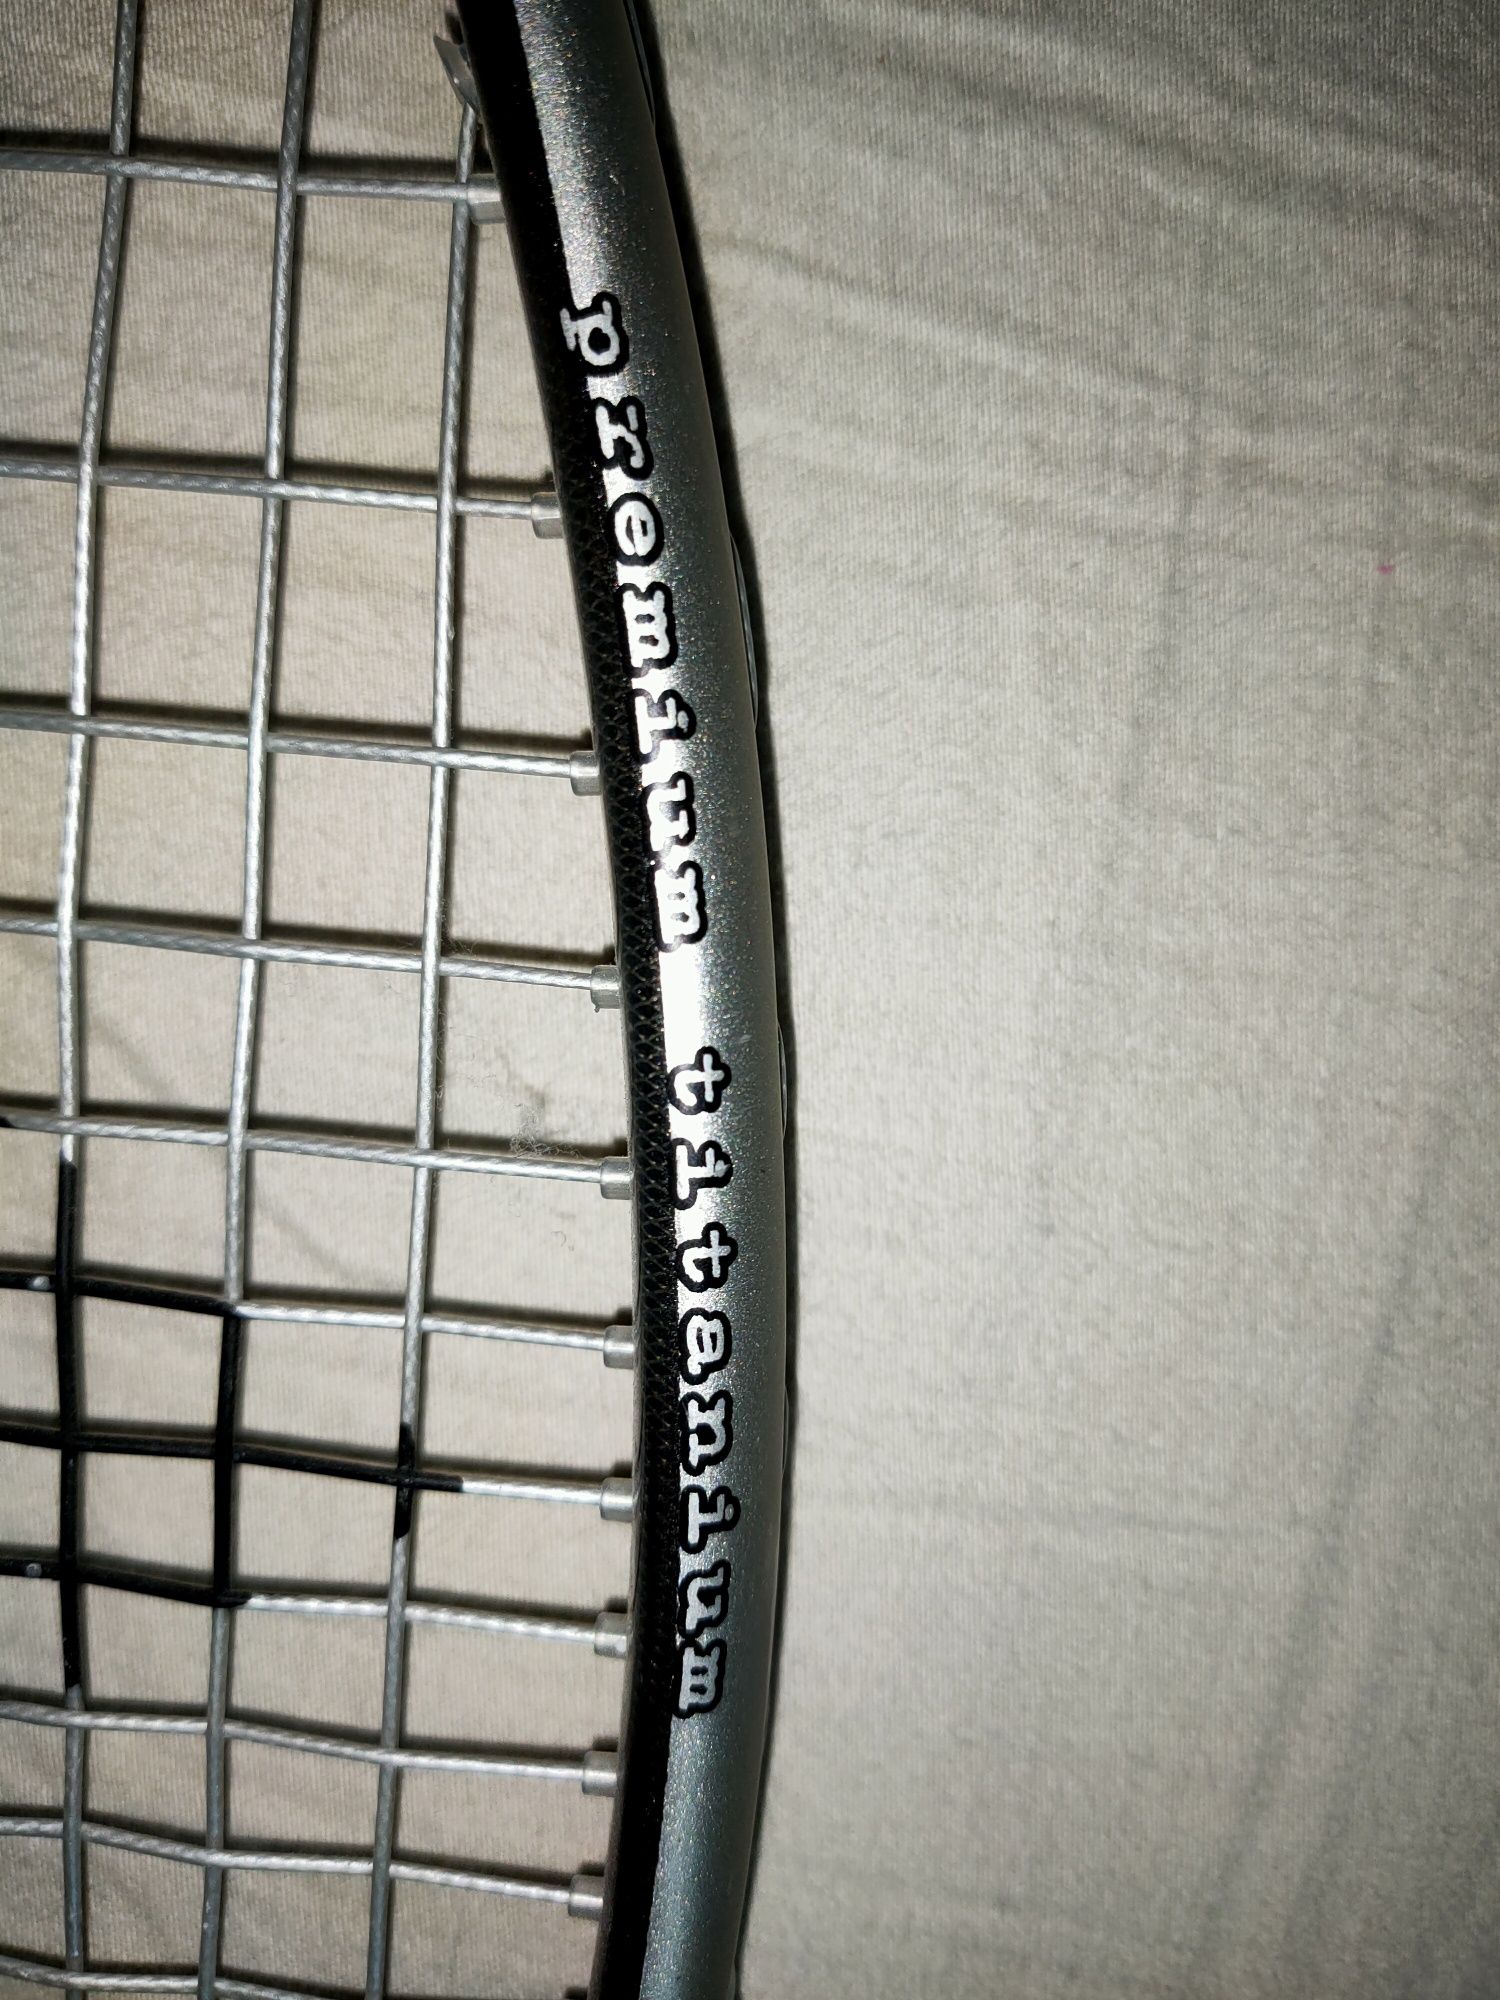 Racheta Squash noua Dunlop Black Max Titaniun